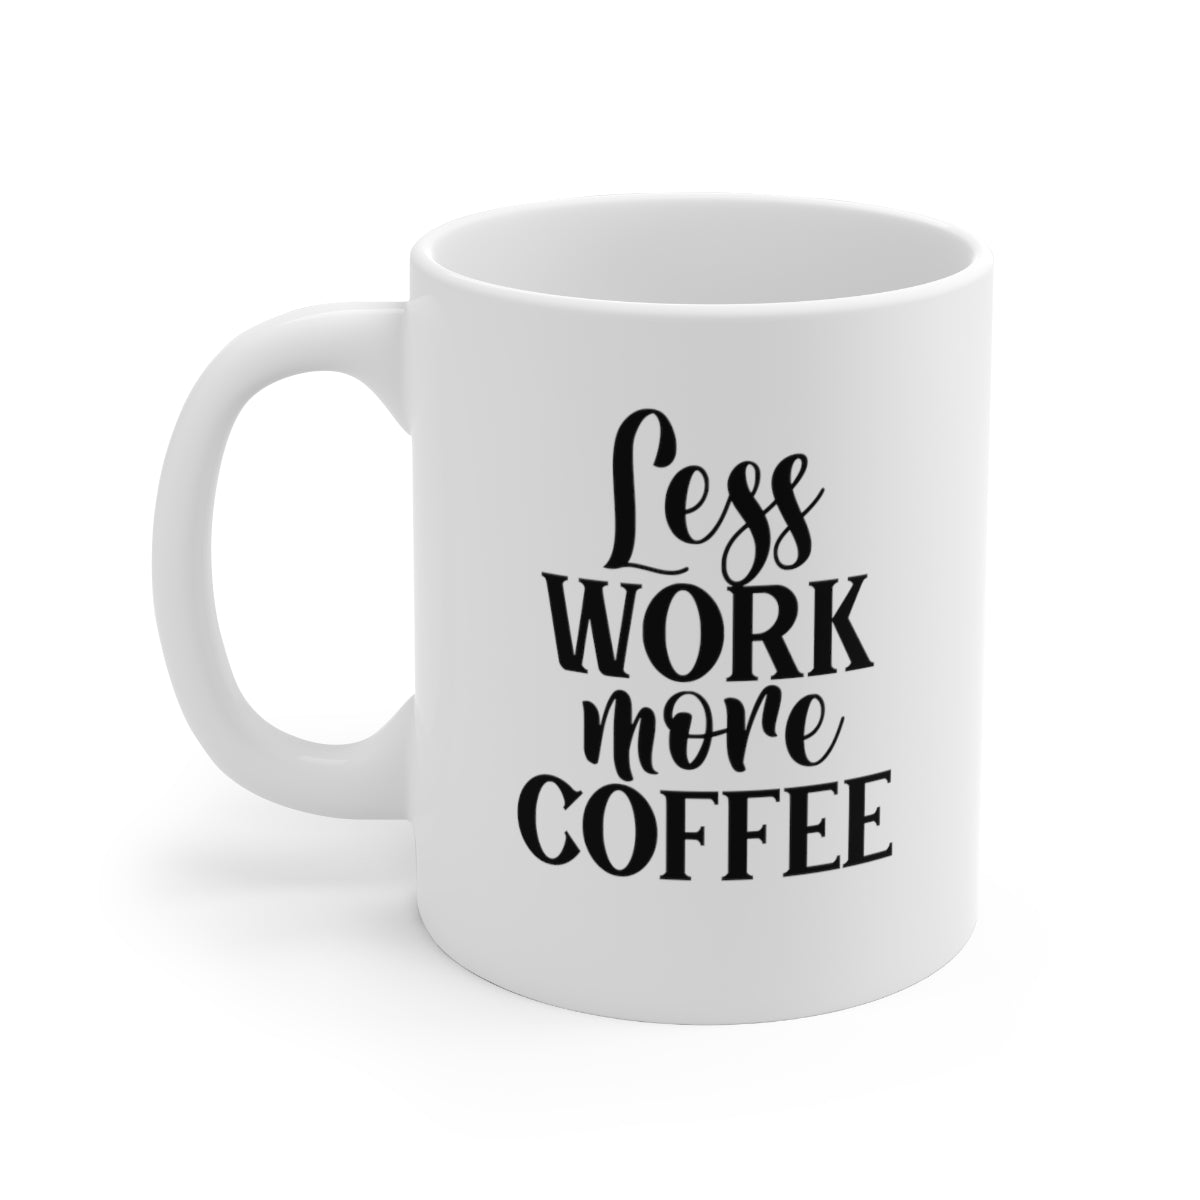 Less Work More Coffee Ceramic Mug